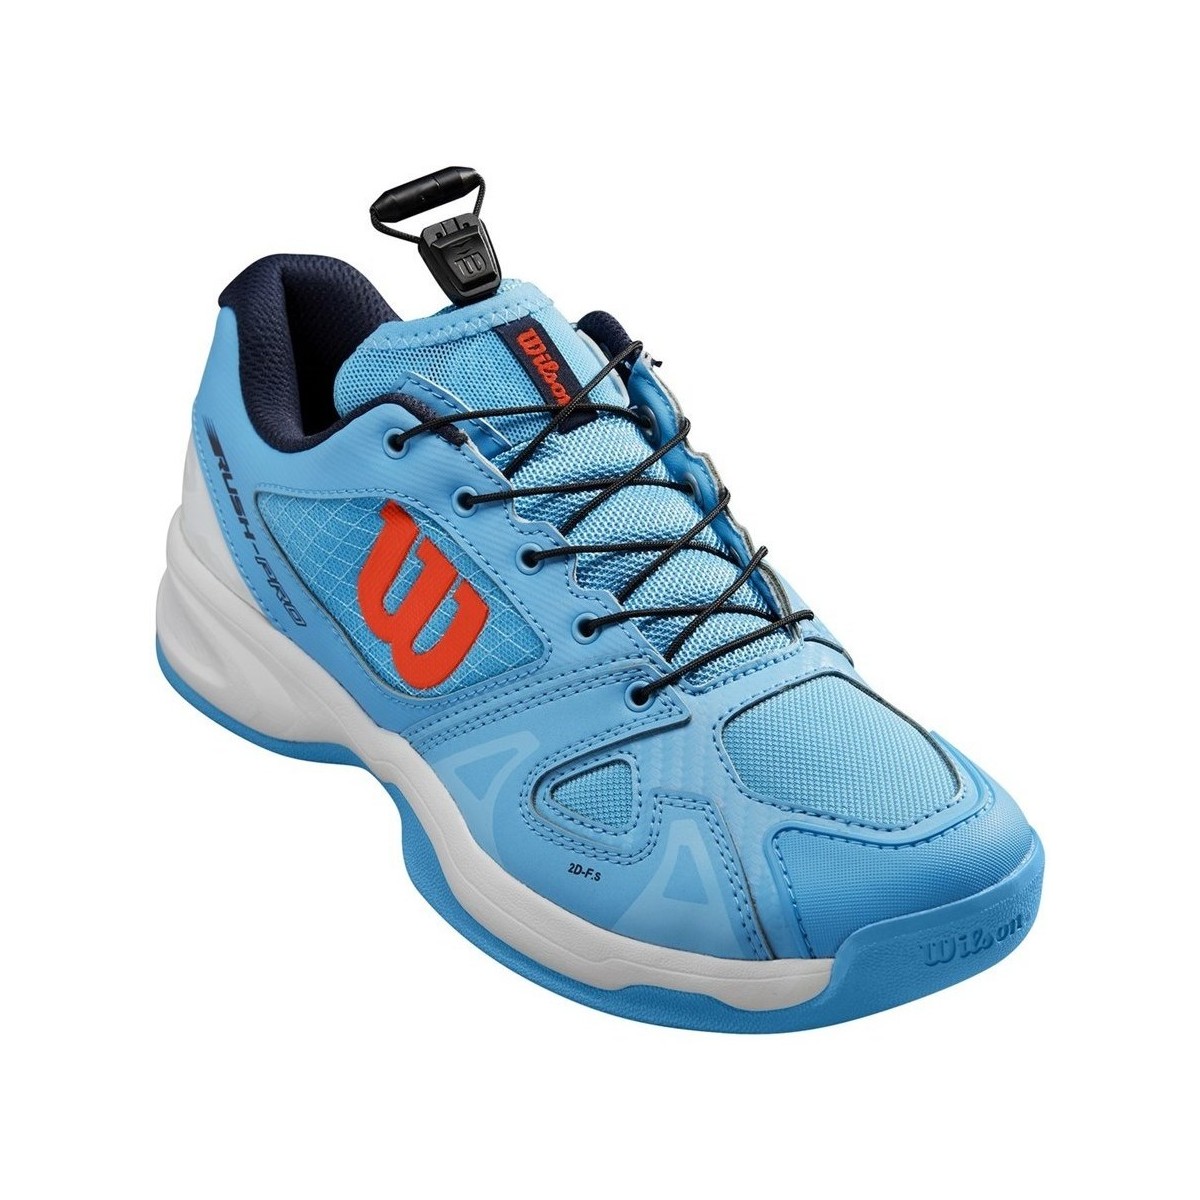 Schuhe Kinder Tennisschuhe Wilson Rush Pro Junior QL Blau